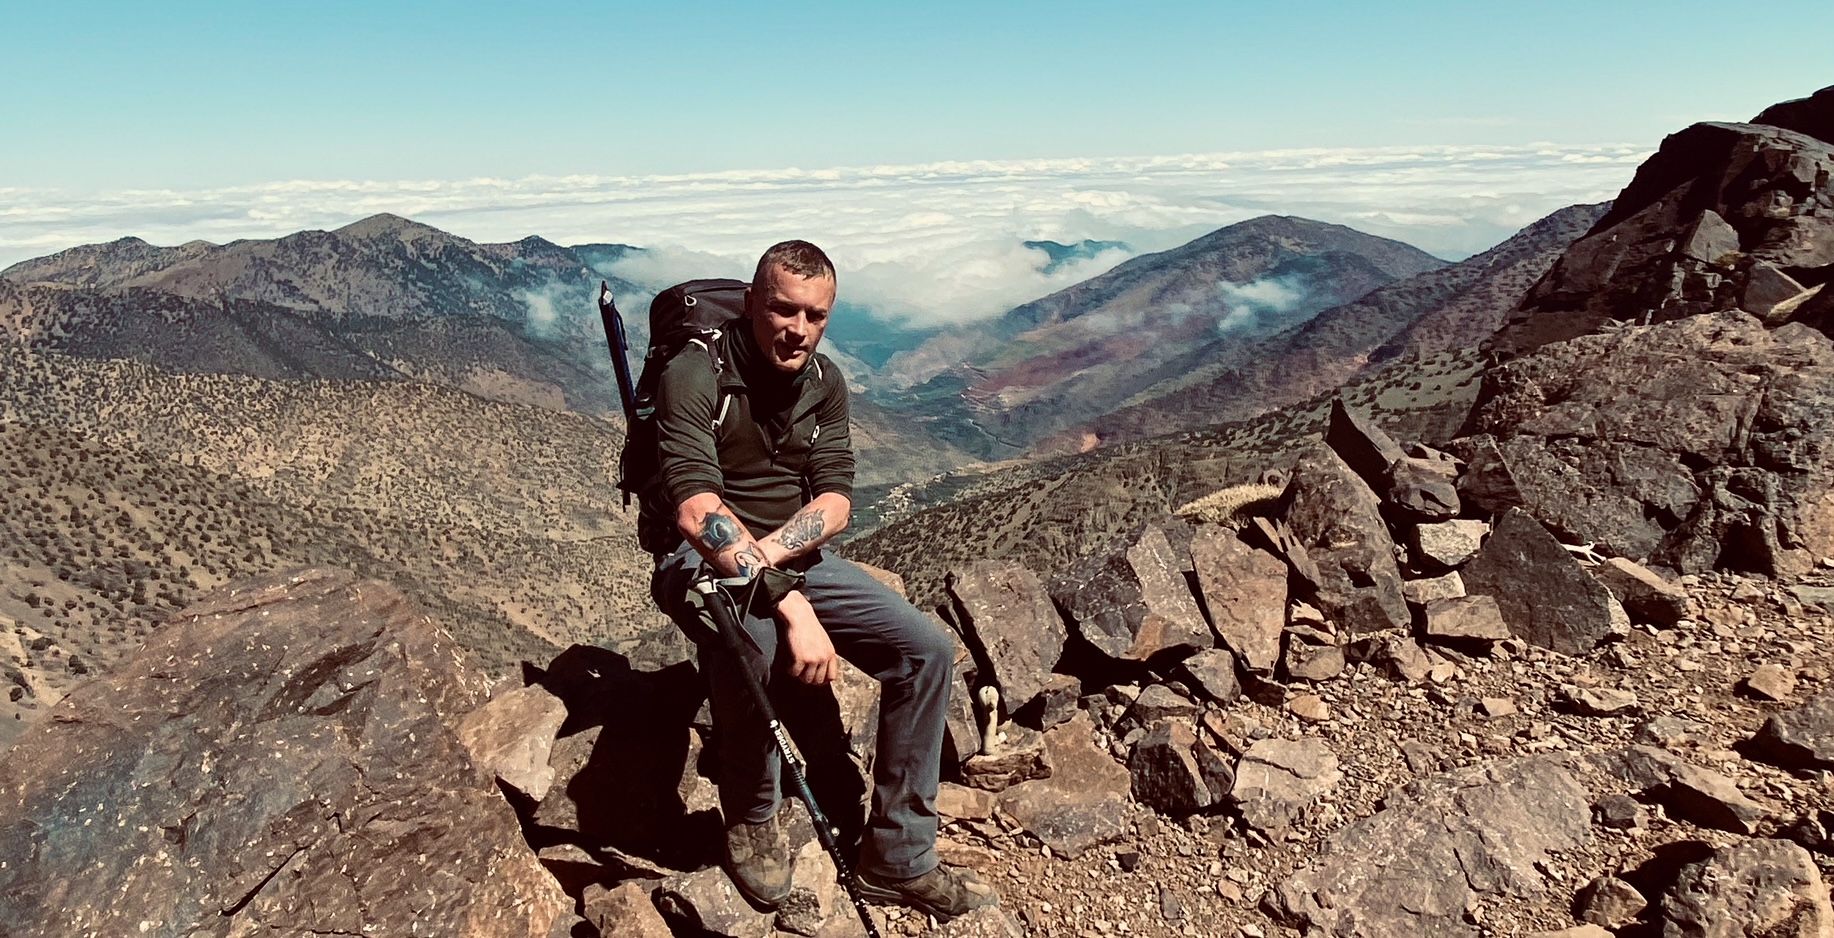 Matt Carpenter sat on rocks with the Atlas Mountains behind him